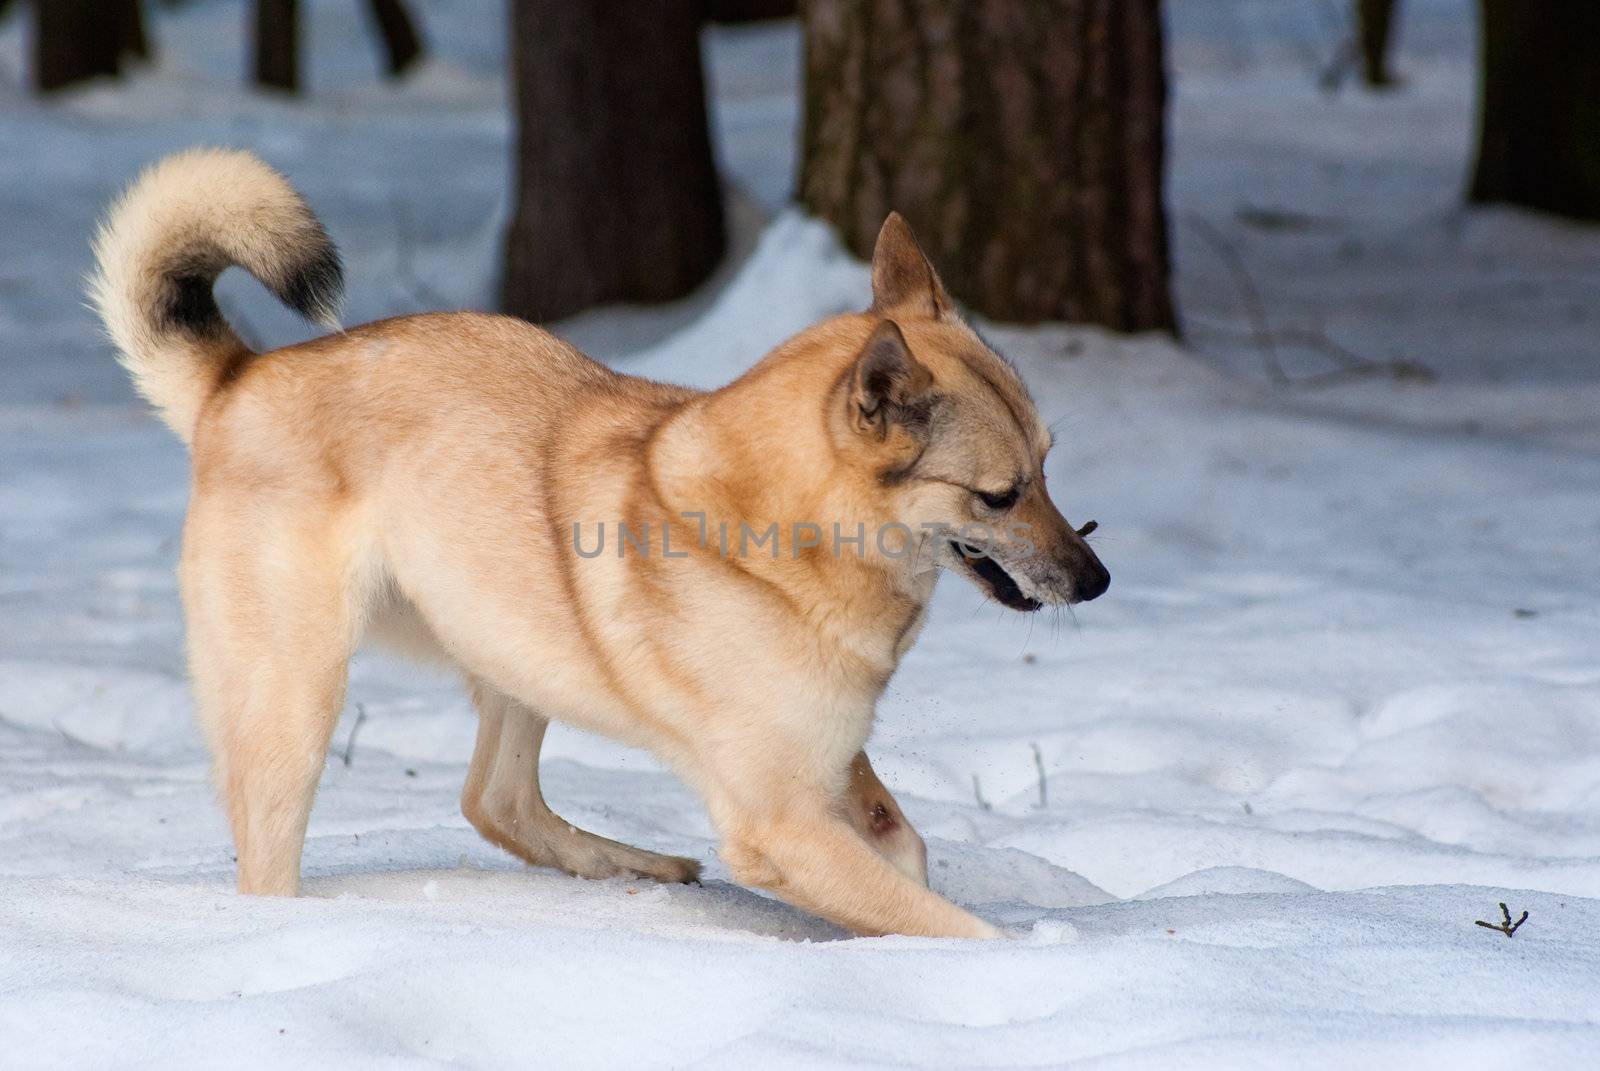 Finnish Spitz-dog digging snow in winter forest